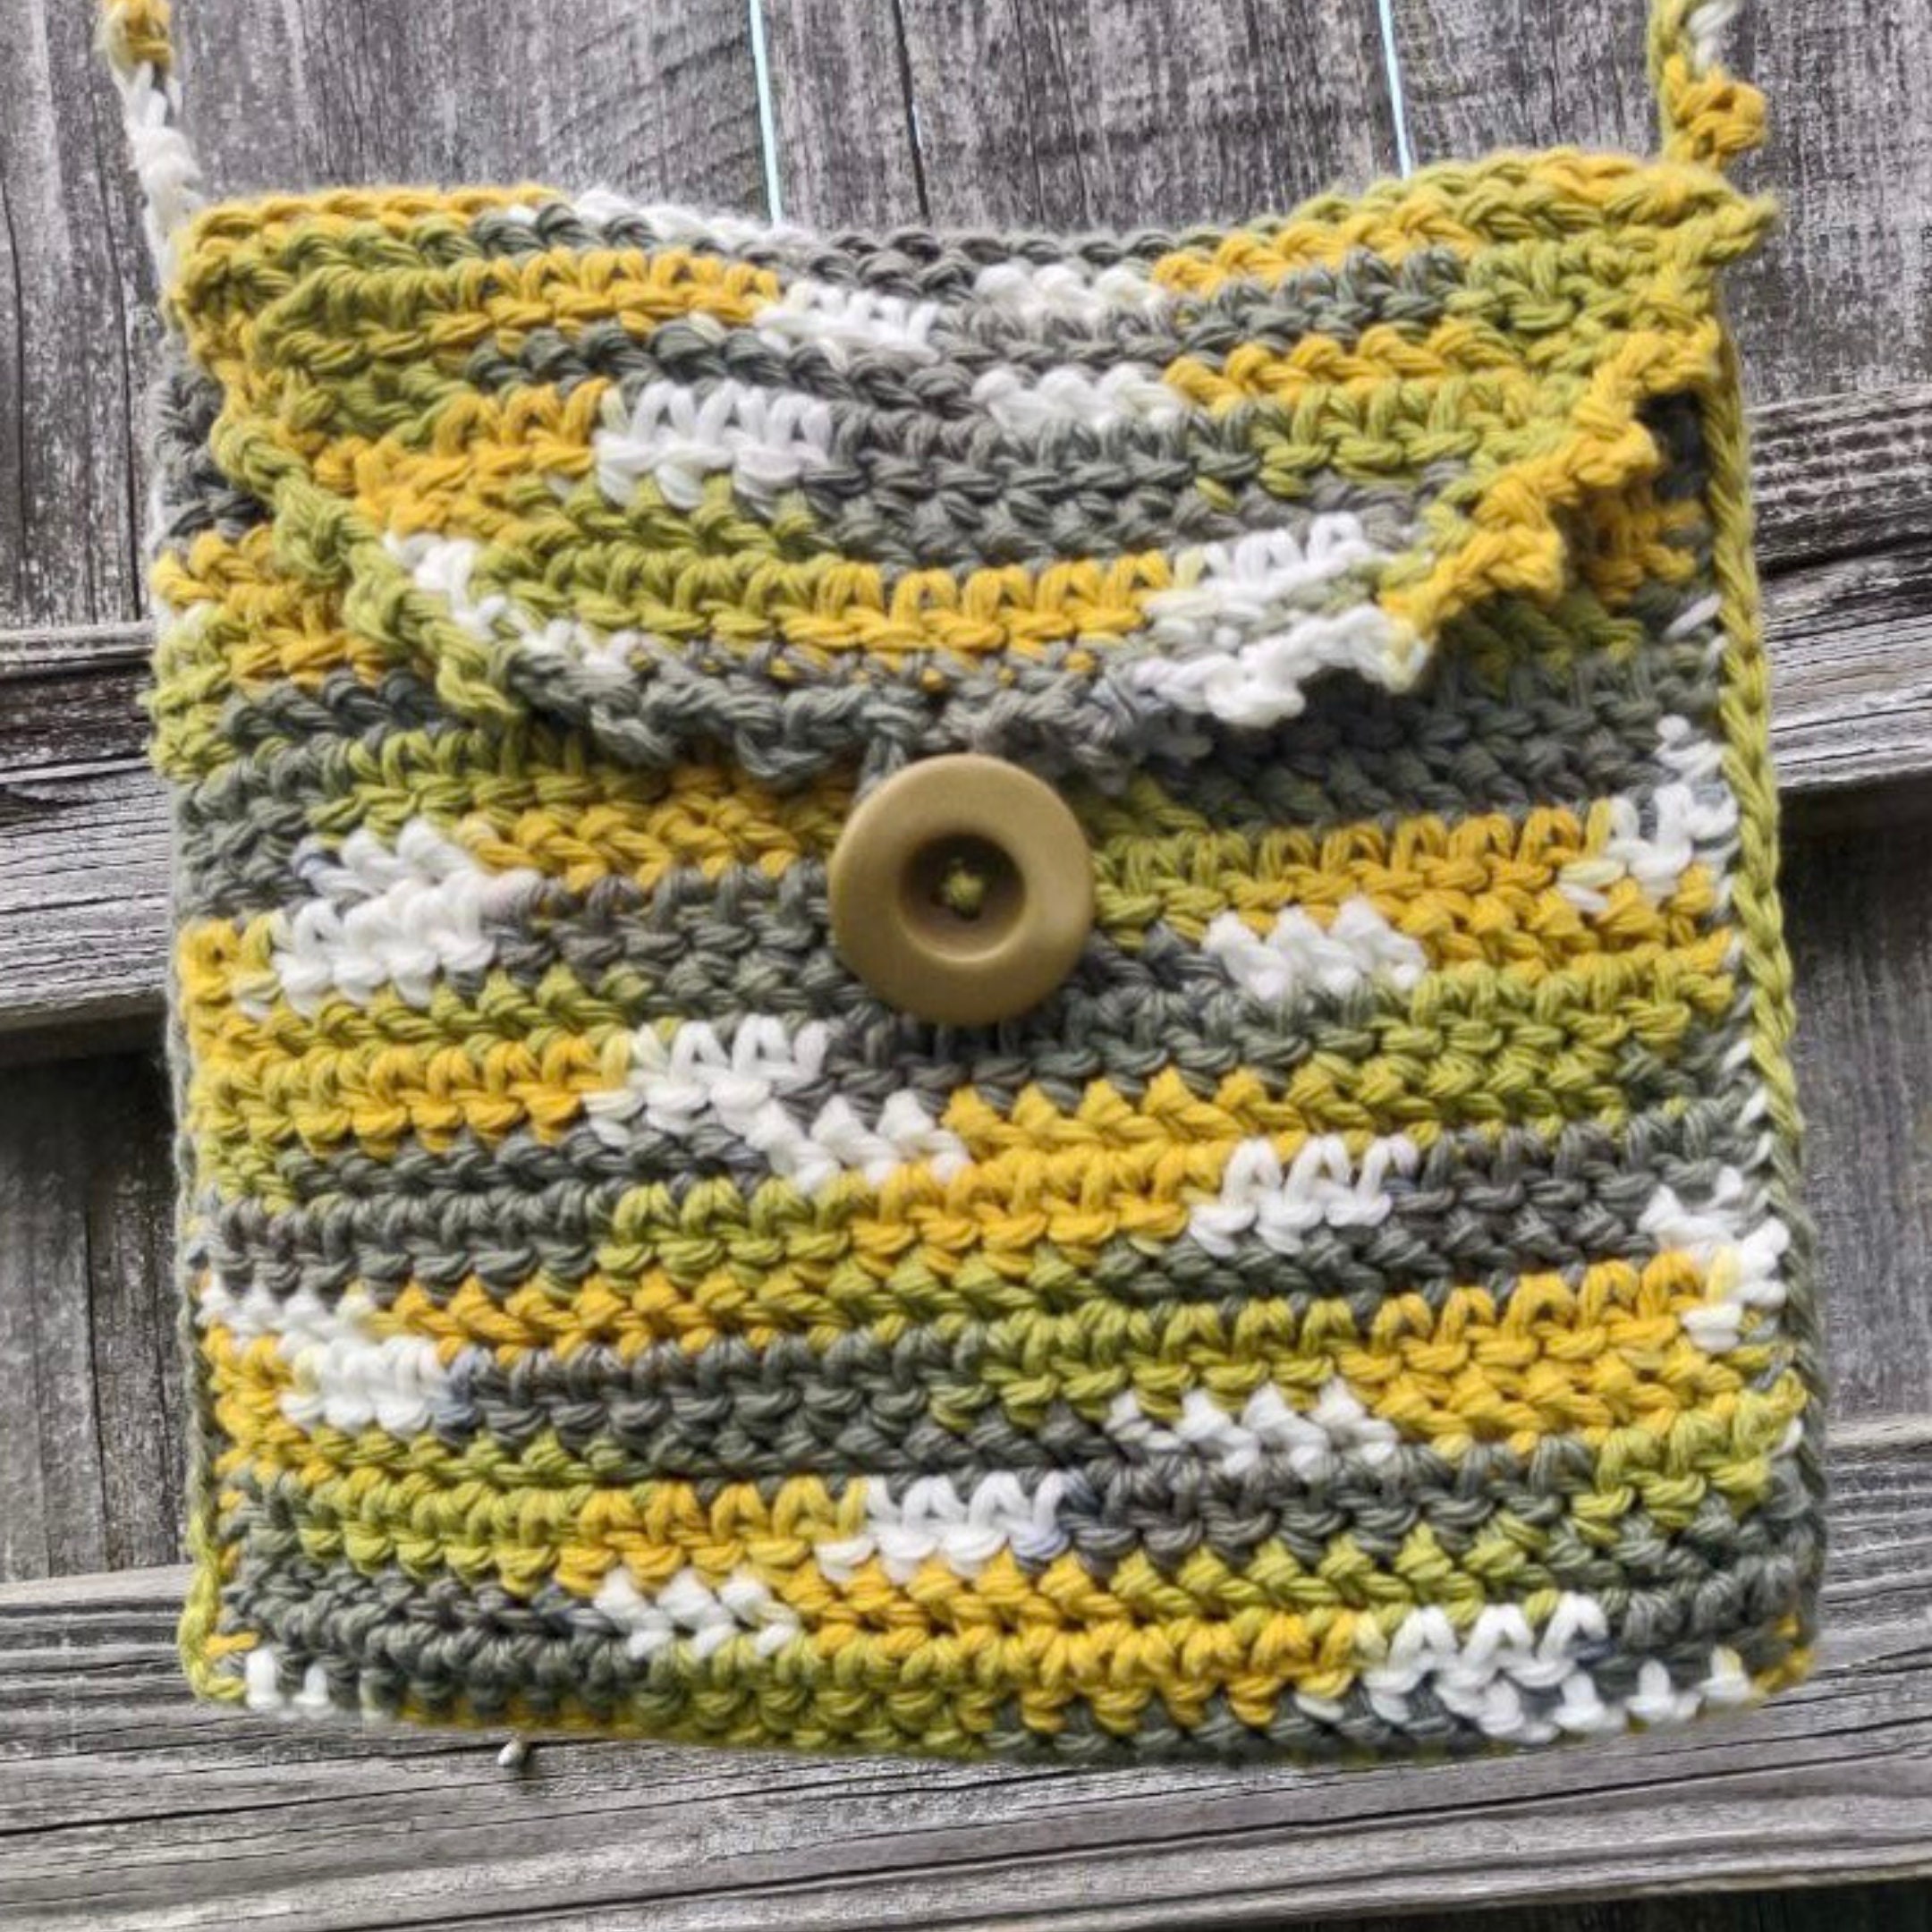 How to crochet a pretty shell stitch purse / bag - YouTube